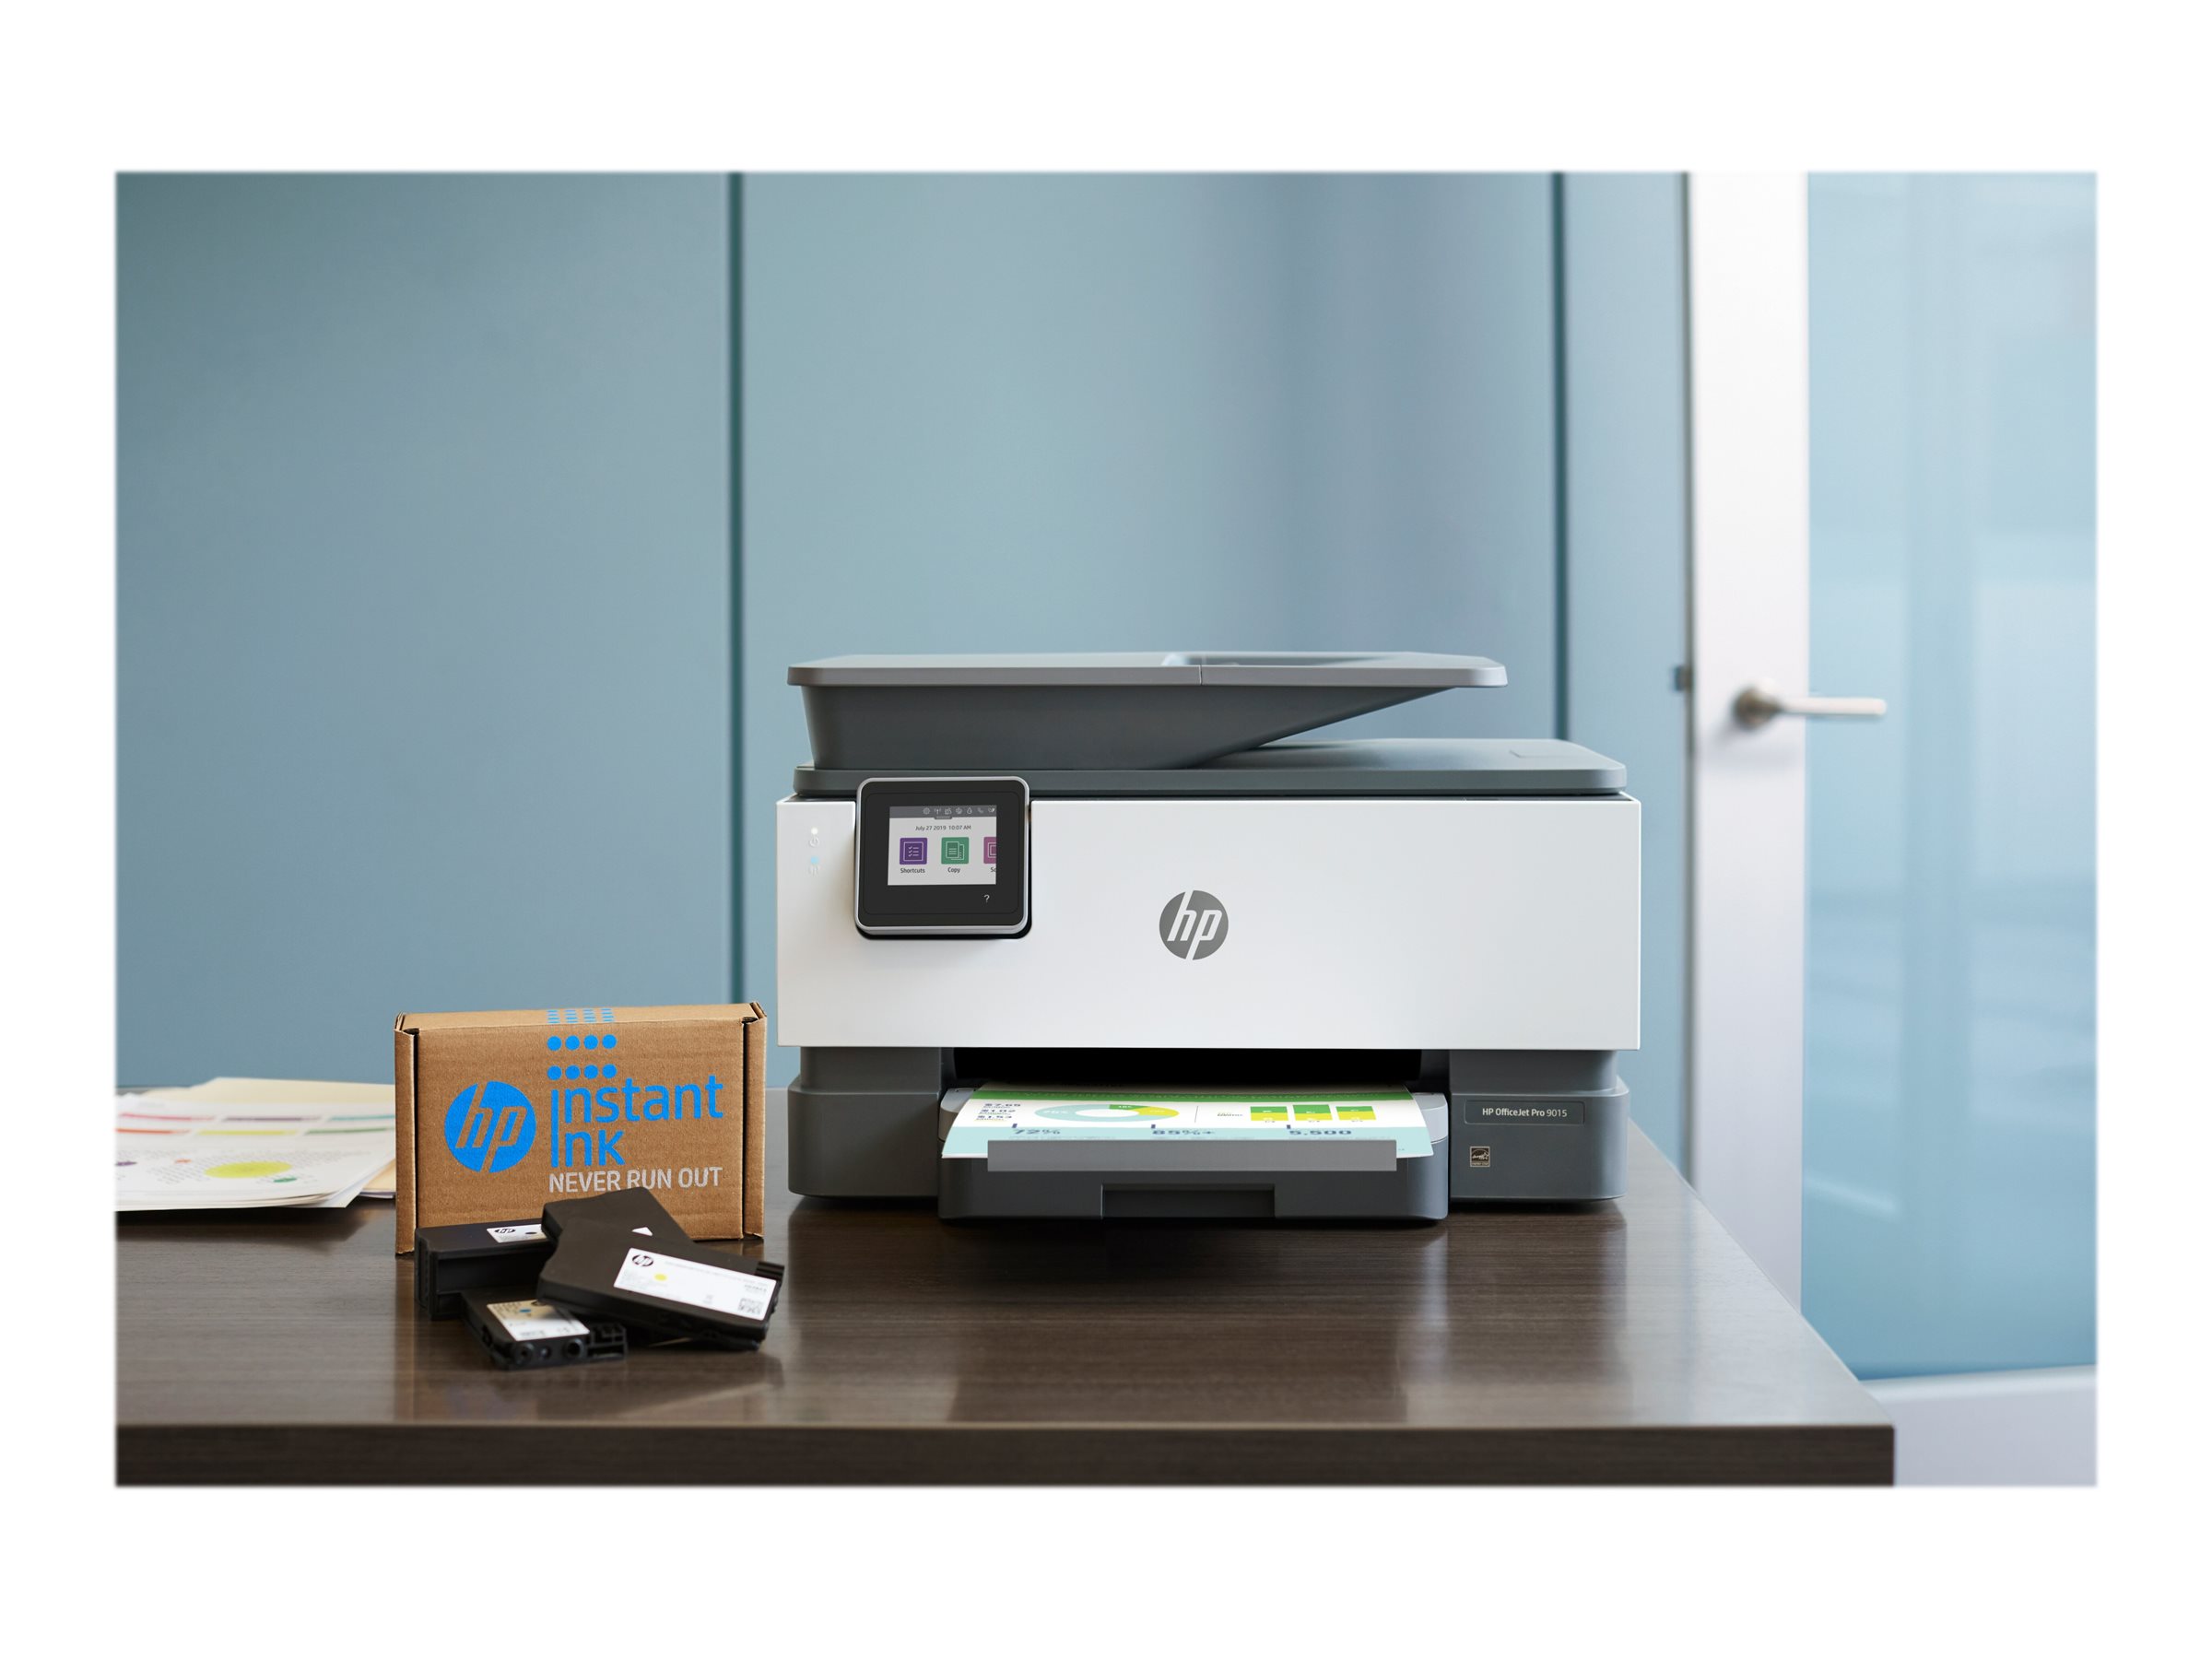 HP OfficeJet Pro 9010 All-in-One Printer Review - Impulse Gamer